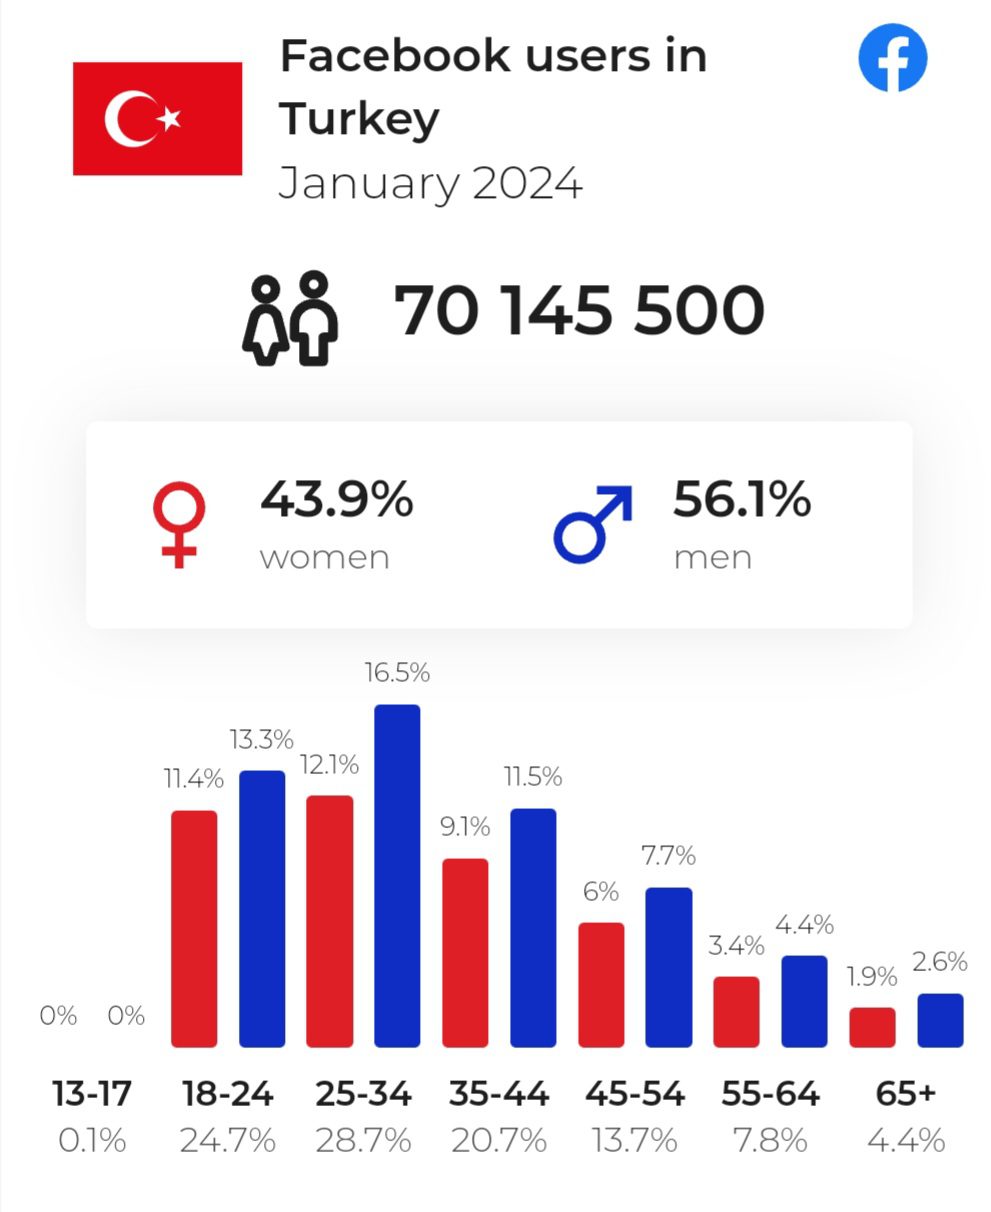 Facebook users in Turkey in 2024